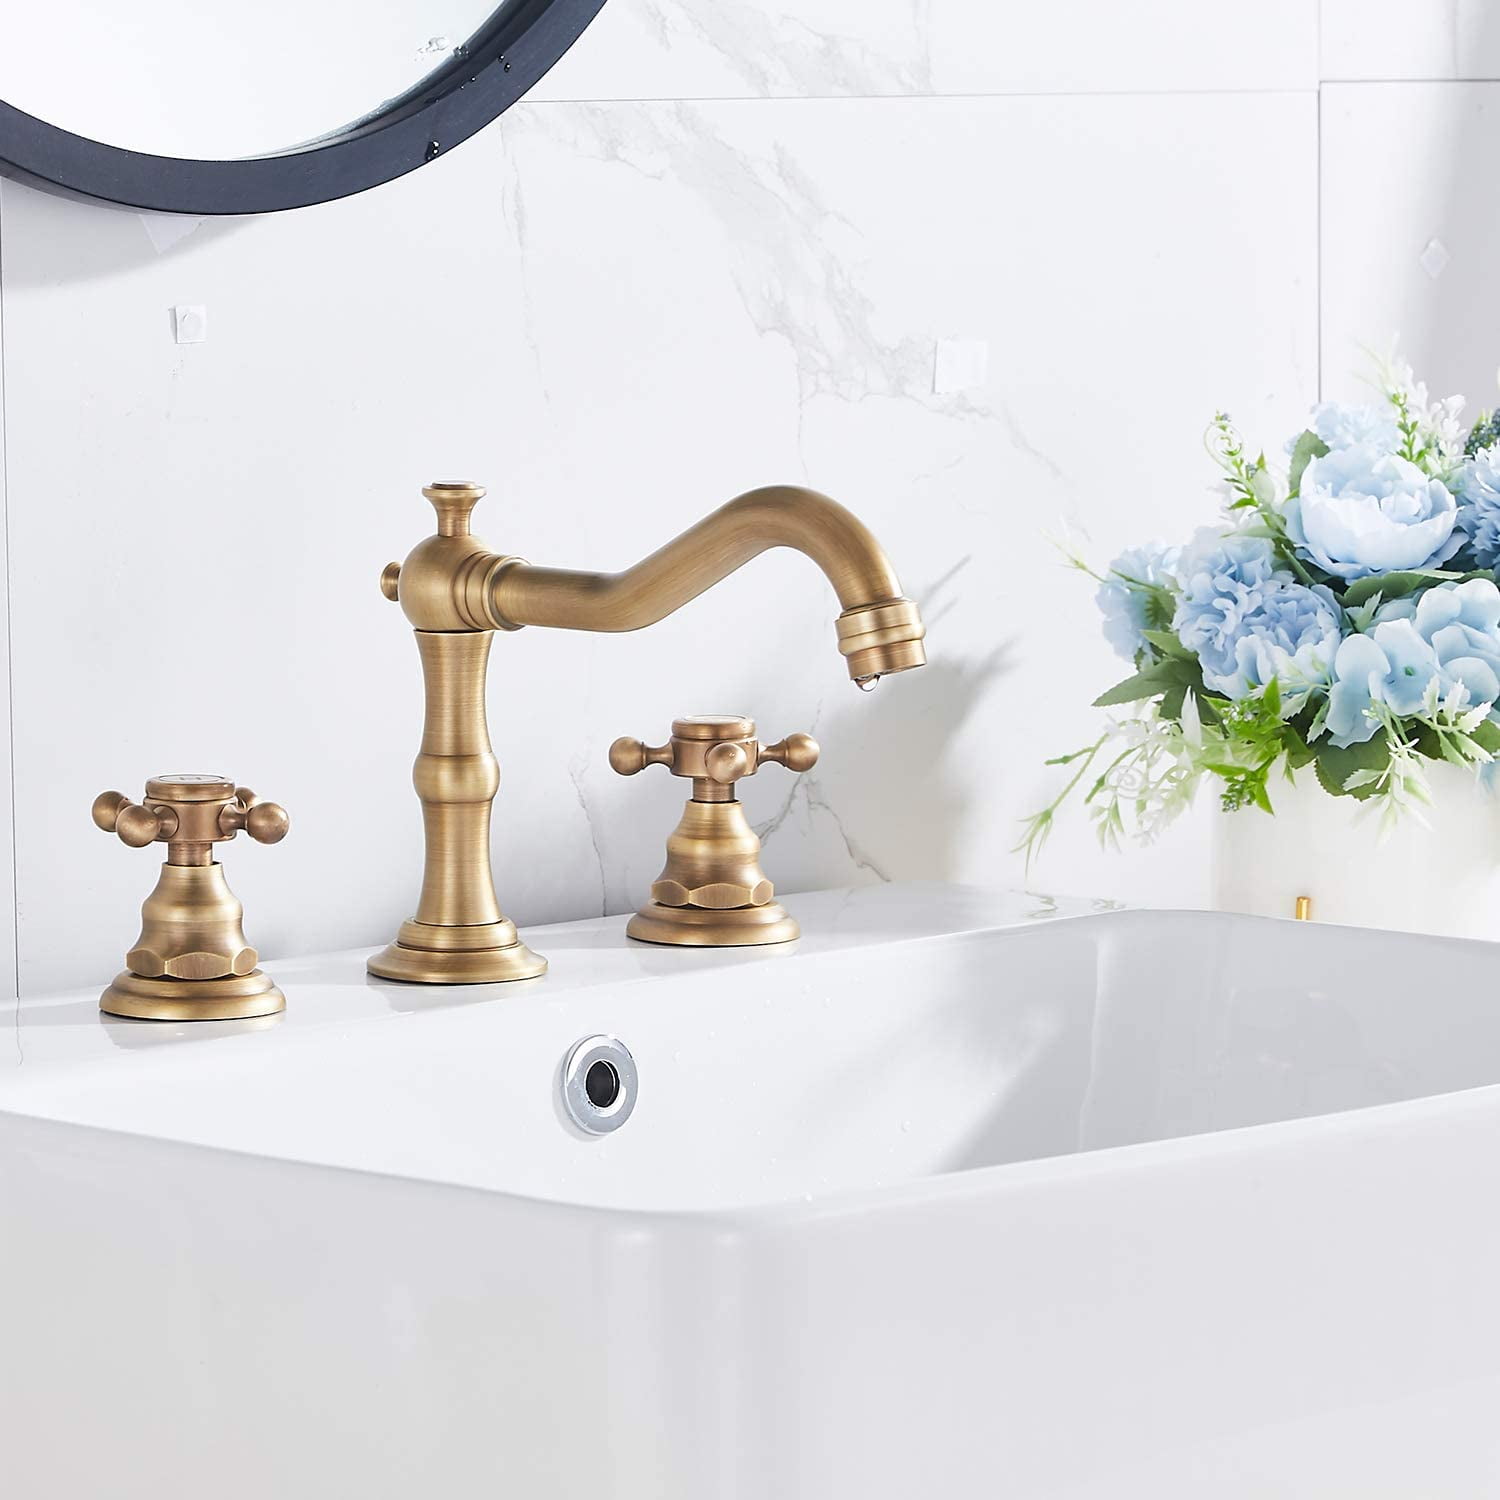 8-16 inch 2 Handles 3 Holes Widespread Bathroom Sink Faucet Antique Brass Bathroom Vanity Faucet Basin Mixer Tap Faucet Matching Metal Pop Up Drain